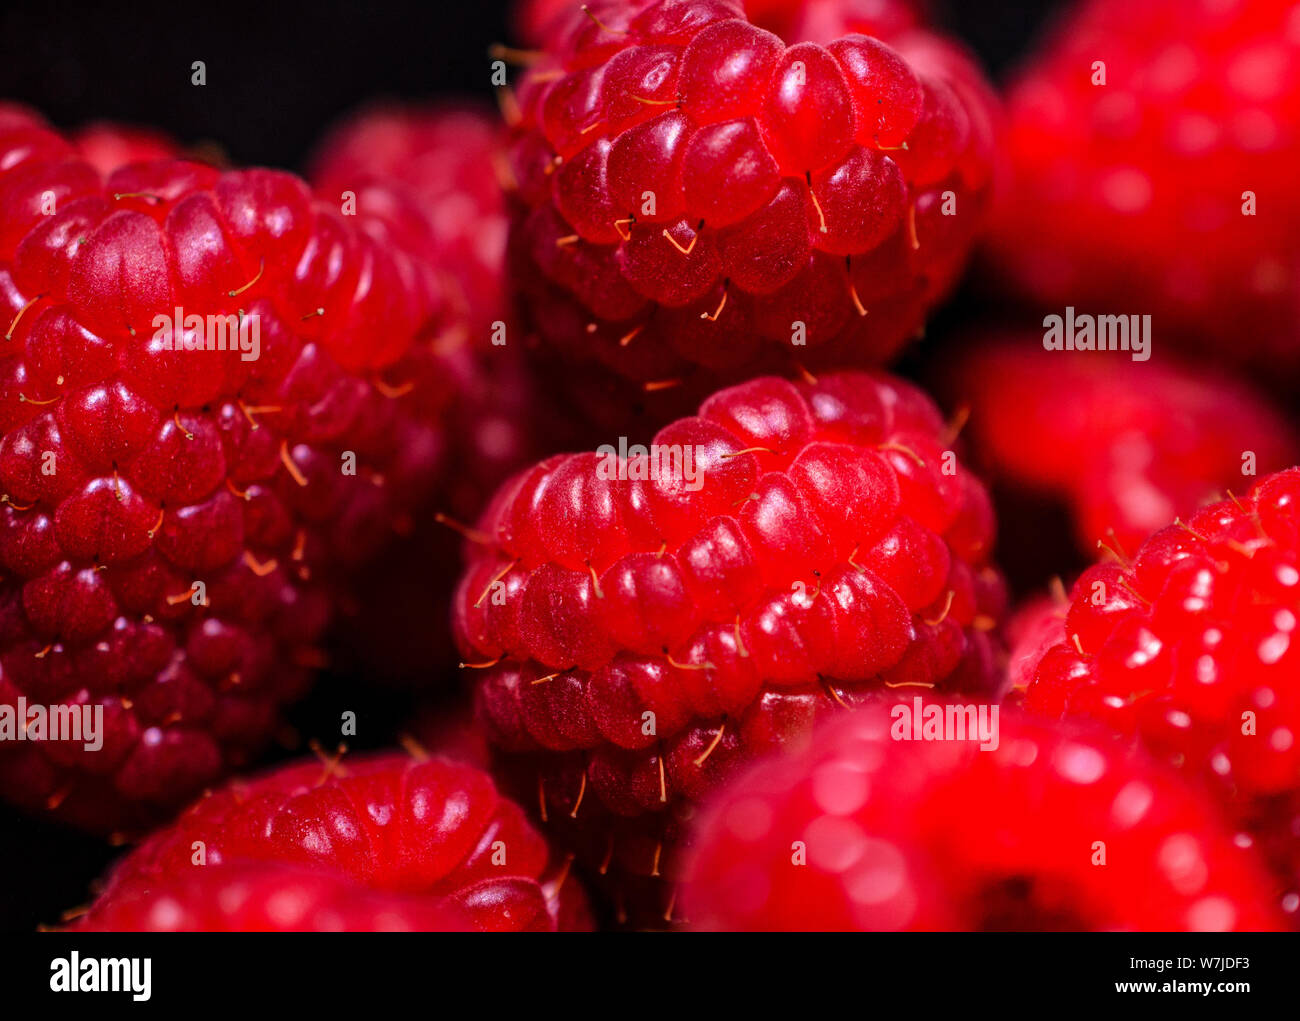 Closeup of Juicy Plump Fresh Raspberries with Sharp Styles (Hairs) Stock Photo